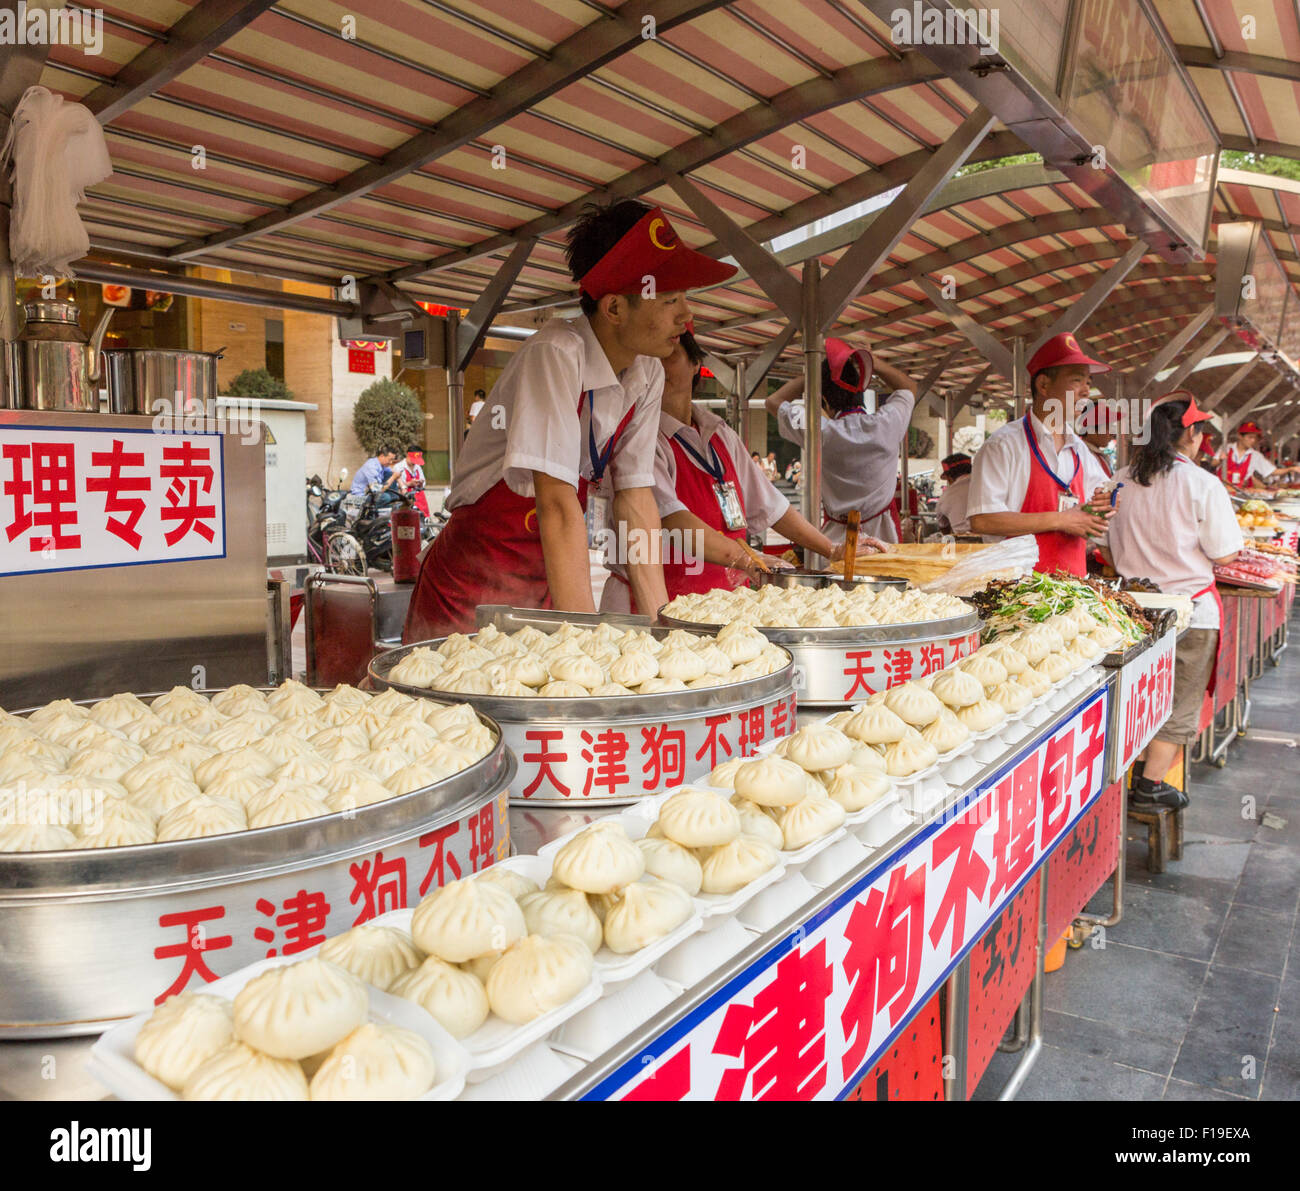 Dumpling vendors wait for customers at Wanfujing St night food market in Beijing China Stock Photo